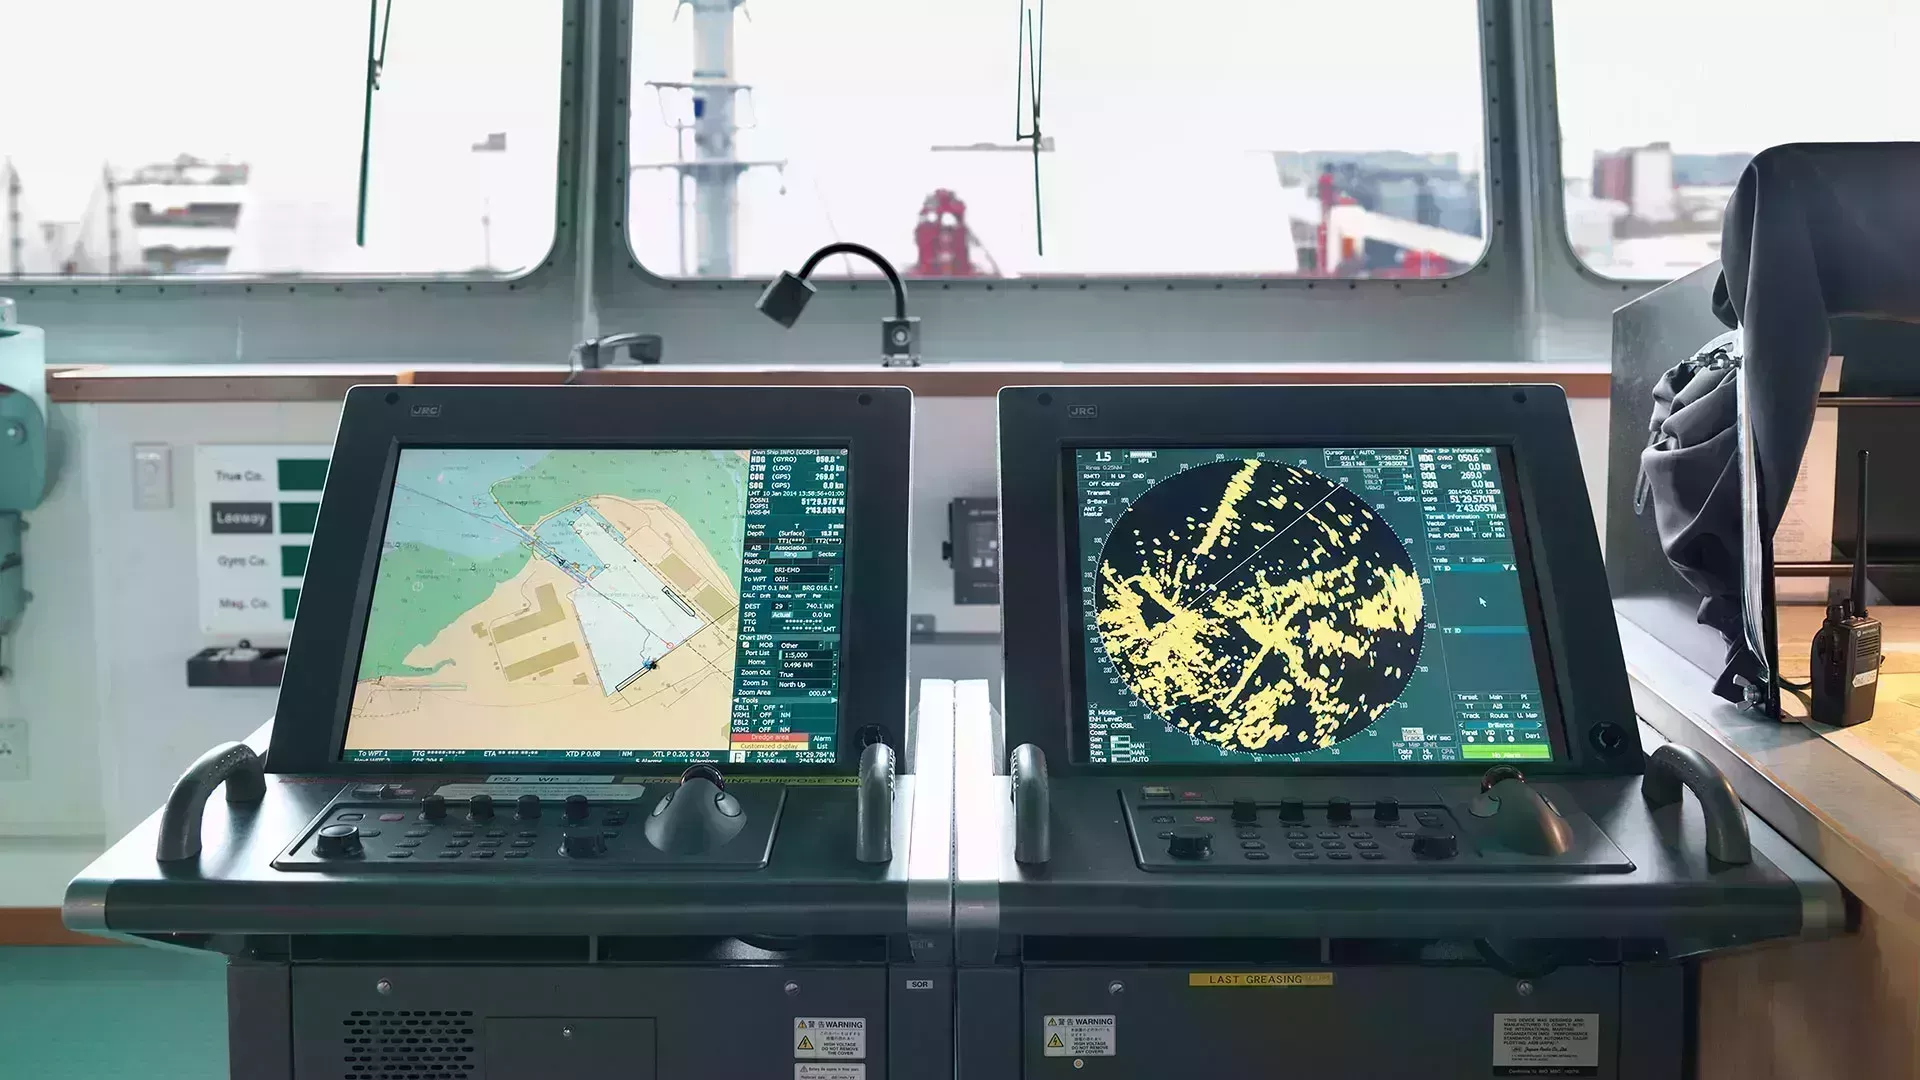 Two ECDIS screens showing navigational charts